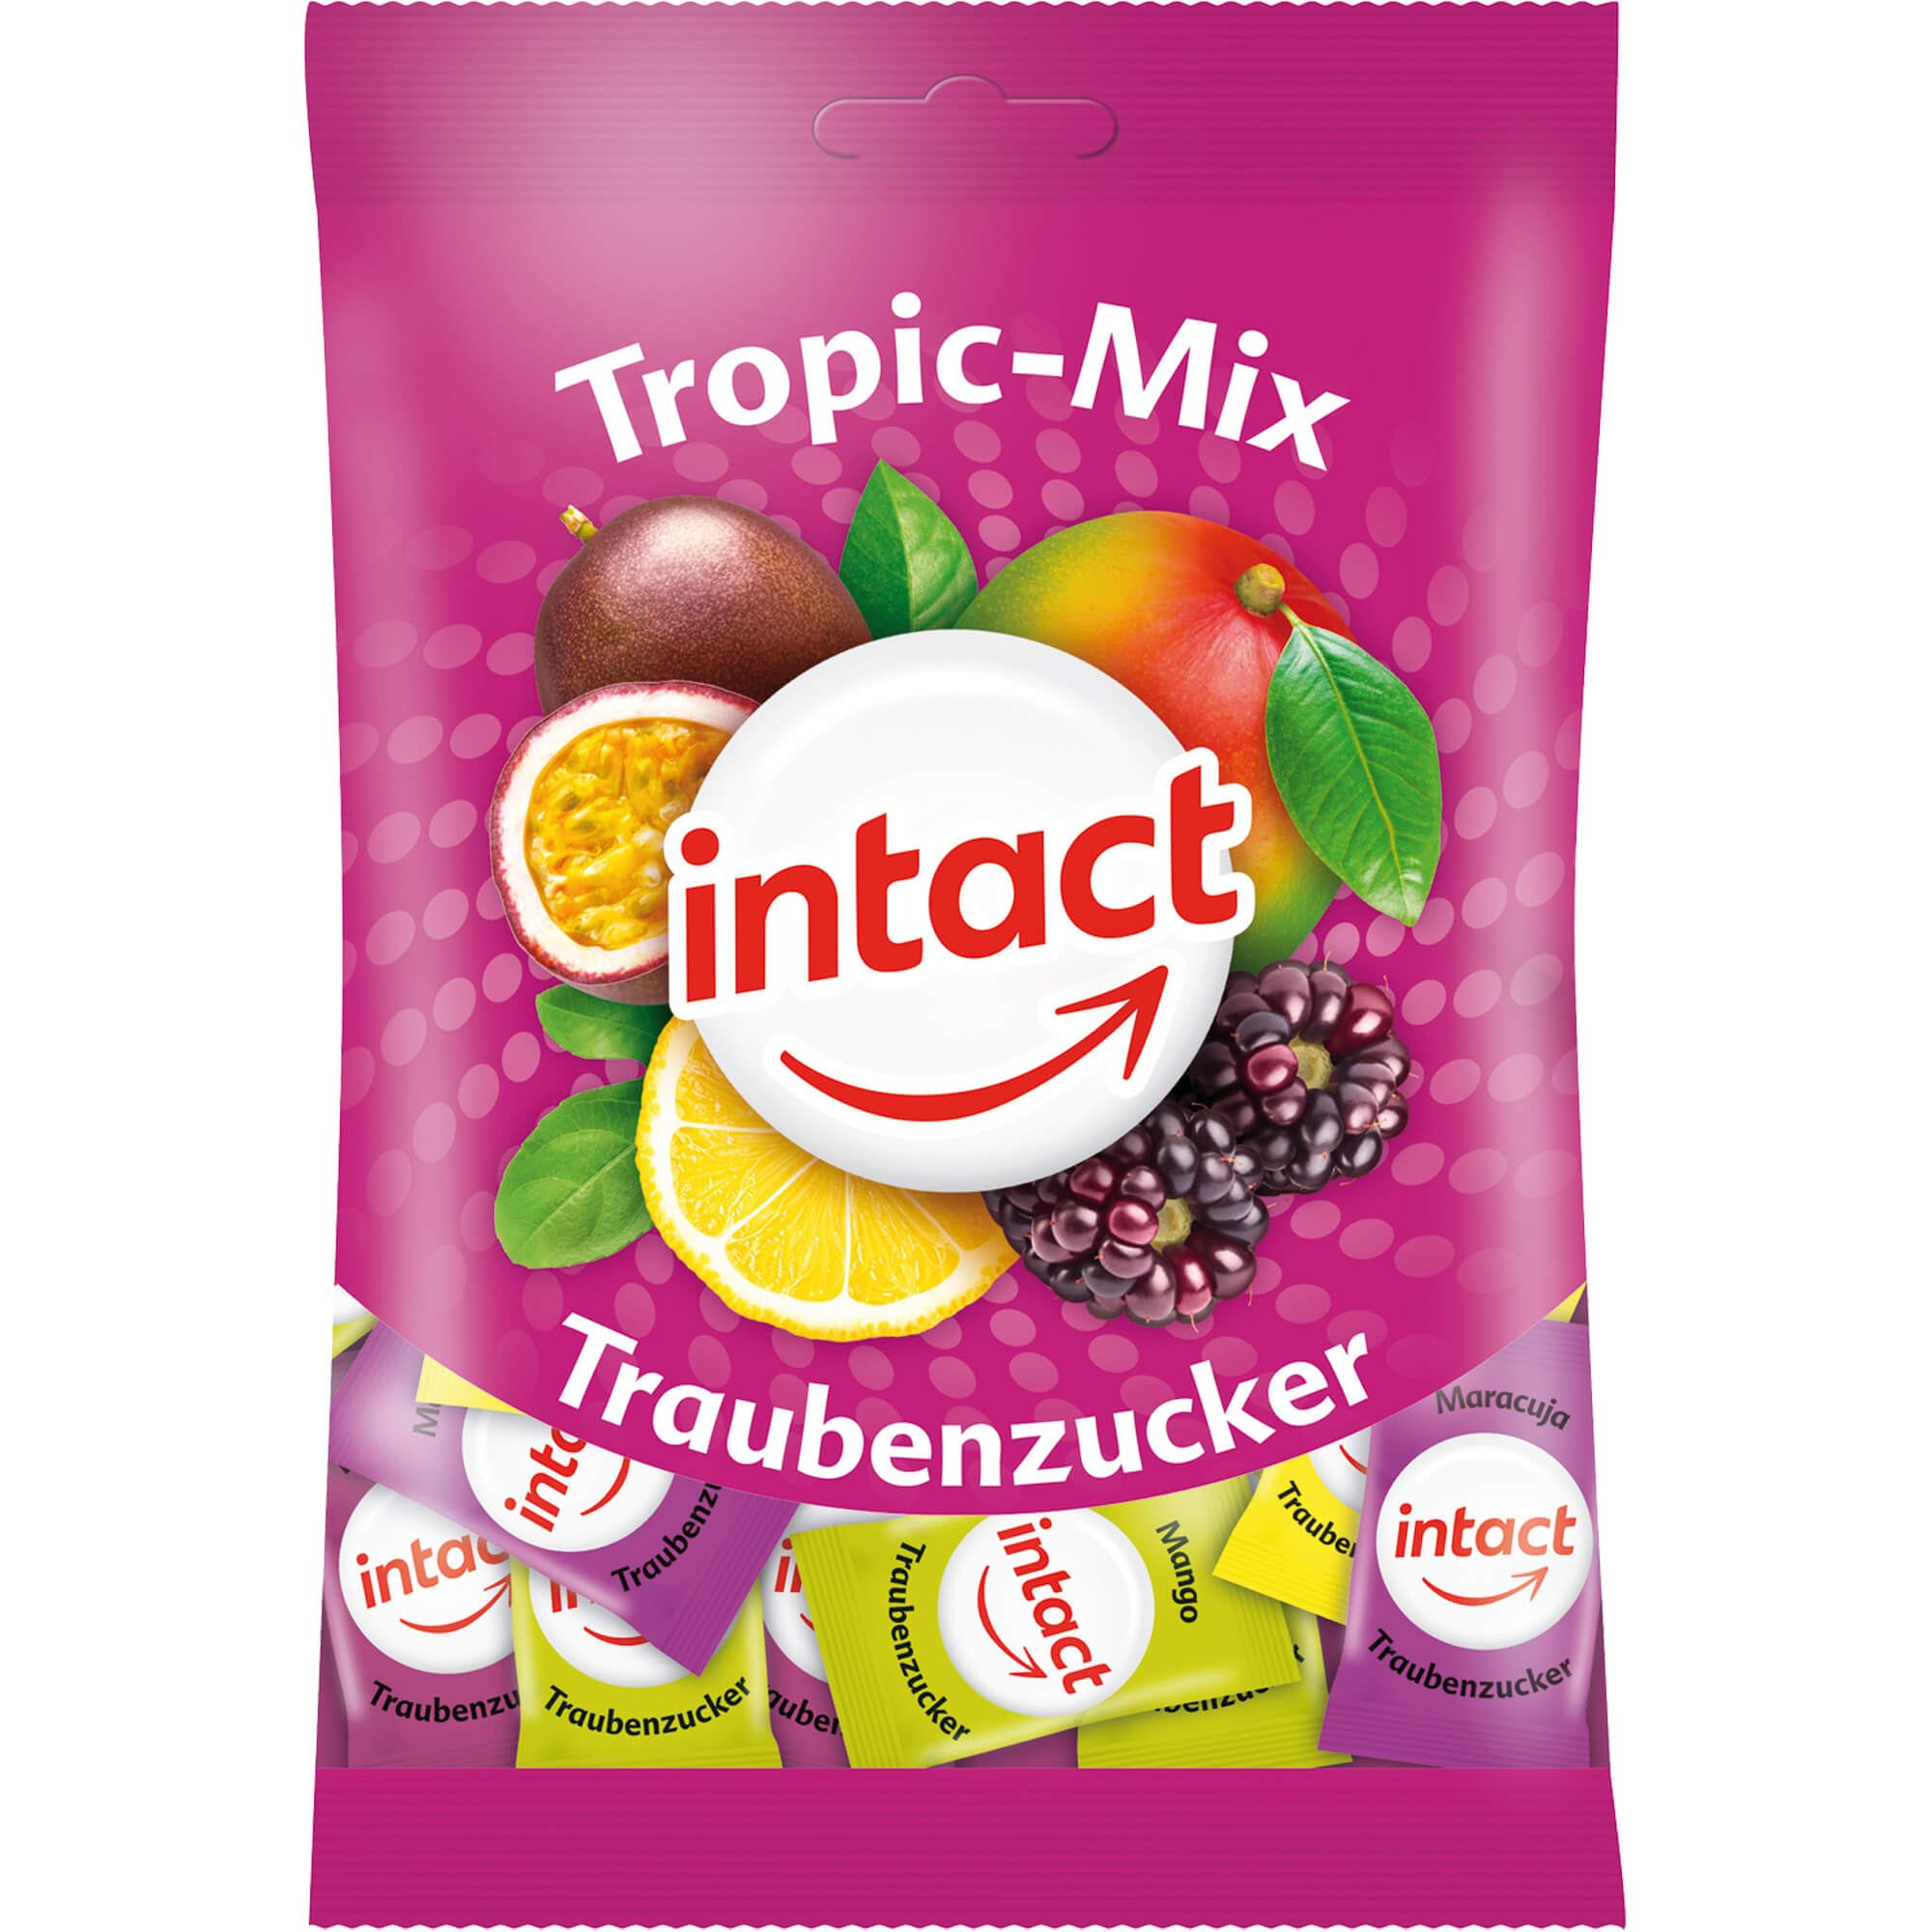 Intact Traubenzucker-Beutel. Tropic-Mix.